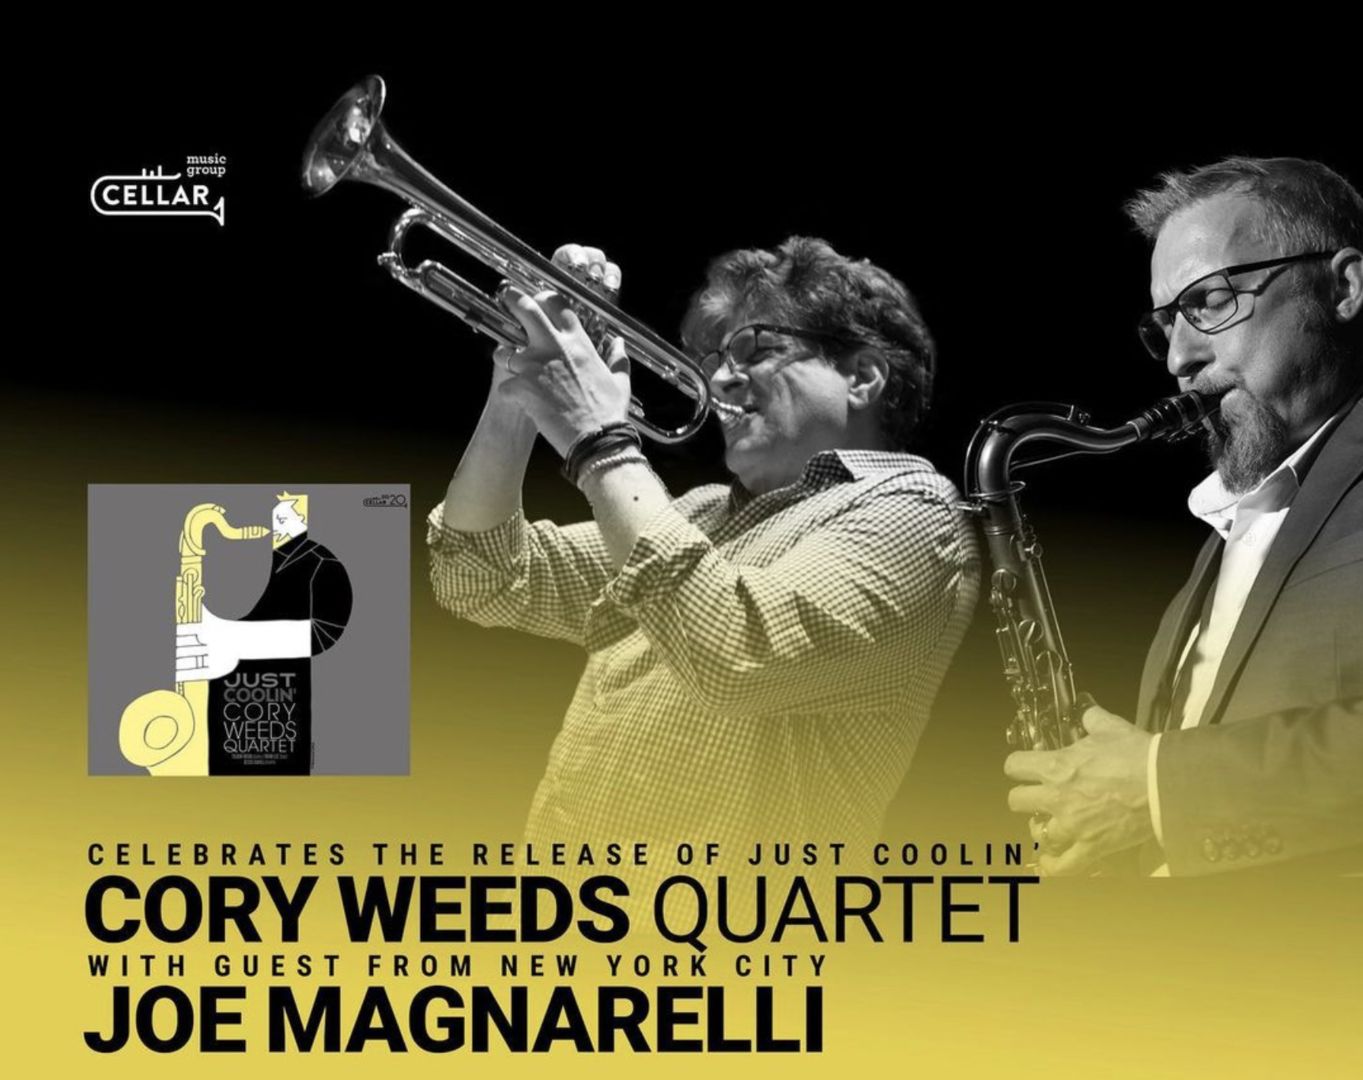 Cory Weeds Quartet with guest Joe Magnarelli, Victoria, British Columbia, Canada